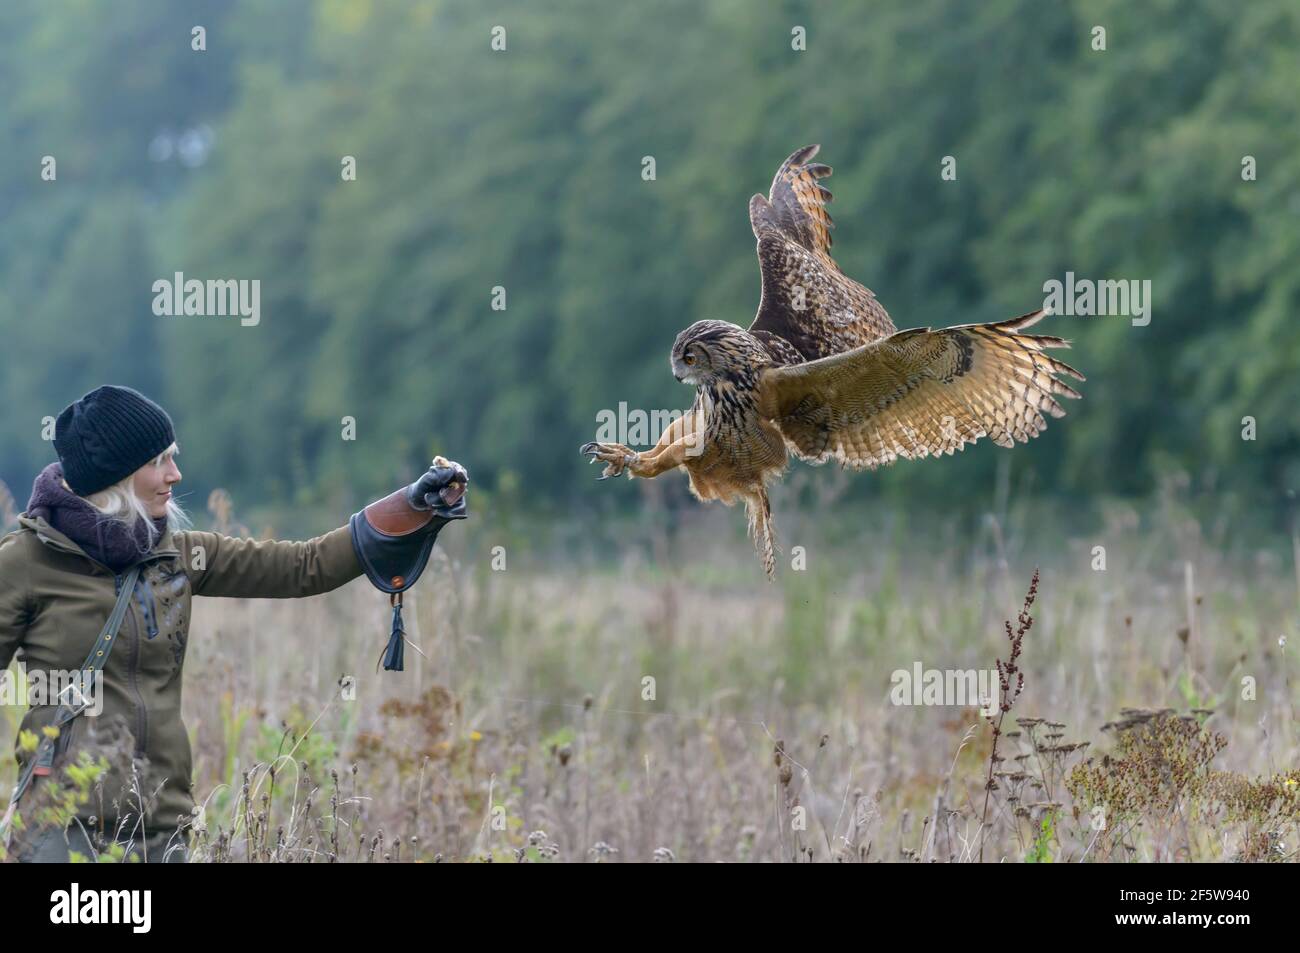 Female falconer with eagle owl (Bubo bubo), falconer, Germany Stock Photo